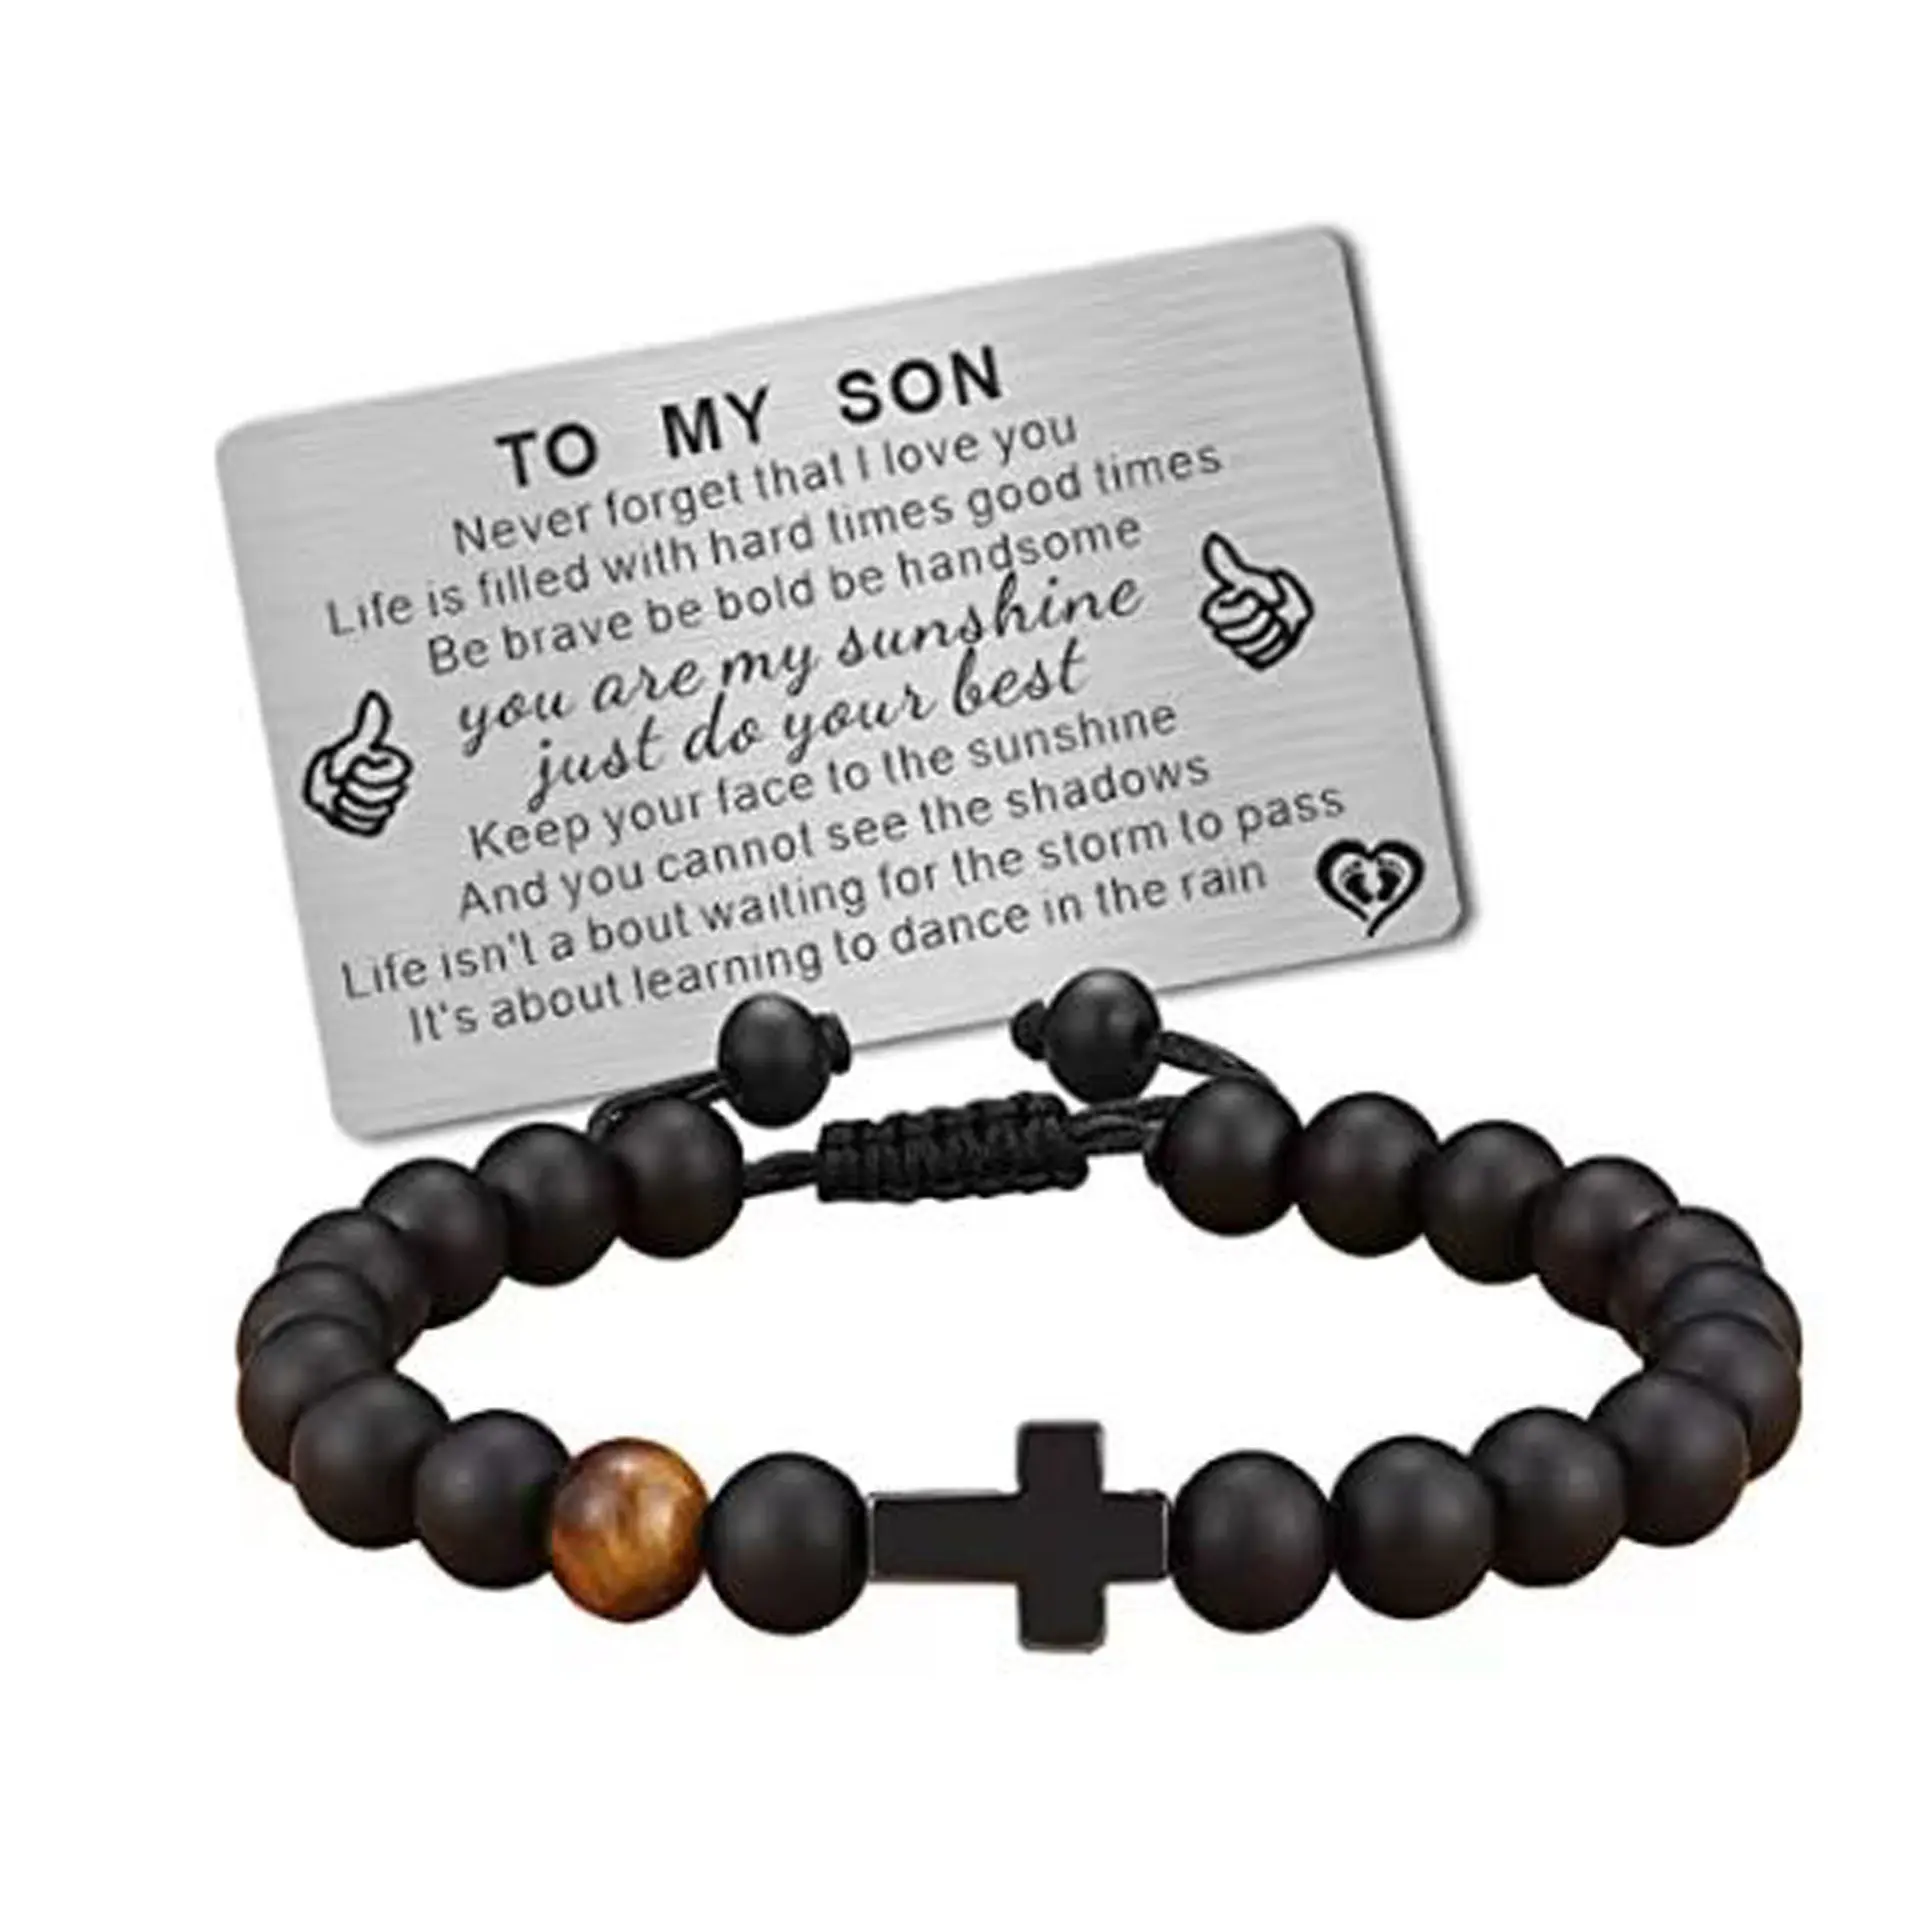 Untuk anak laki-laki hadiah gelang silang untuk gelang manik anak laki-laki hadiah ulang tahun wisuda Natal Kristen untuk anak laki-laki remaja